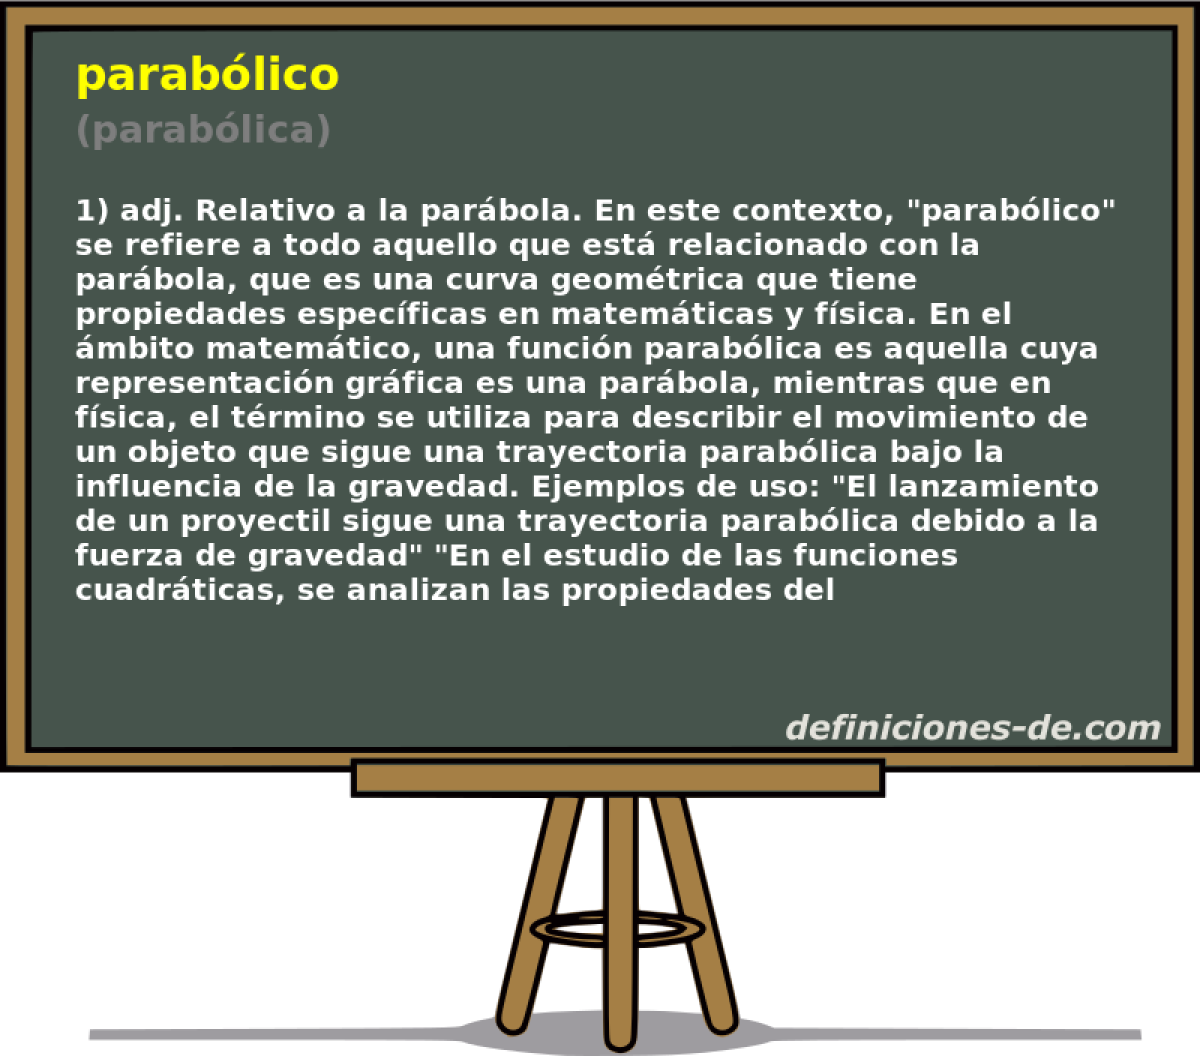 parablico (parablica)